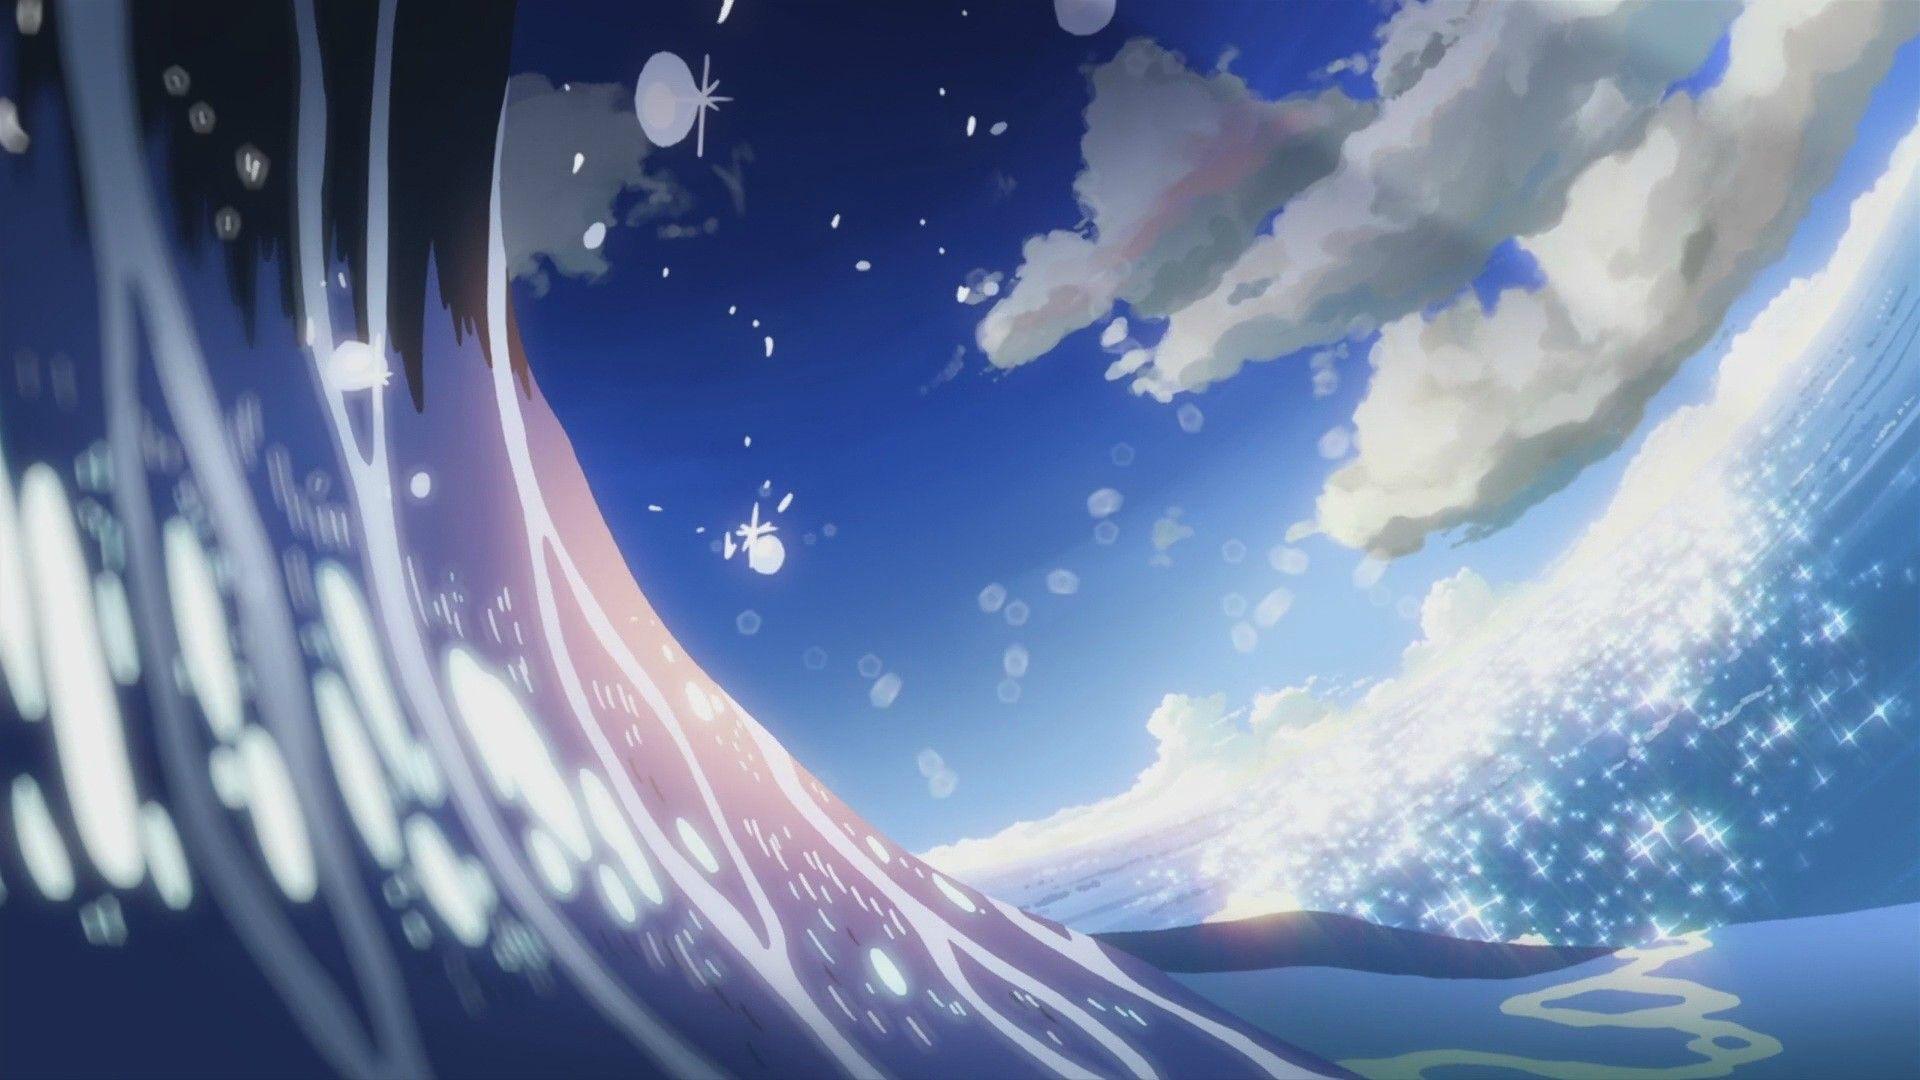 Anime Background. Anime background wallpaper, Anime scenery